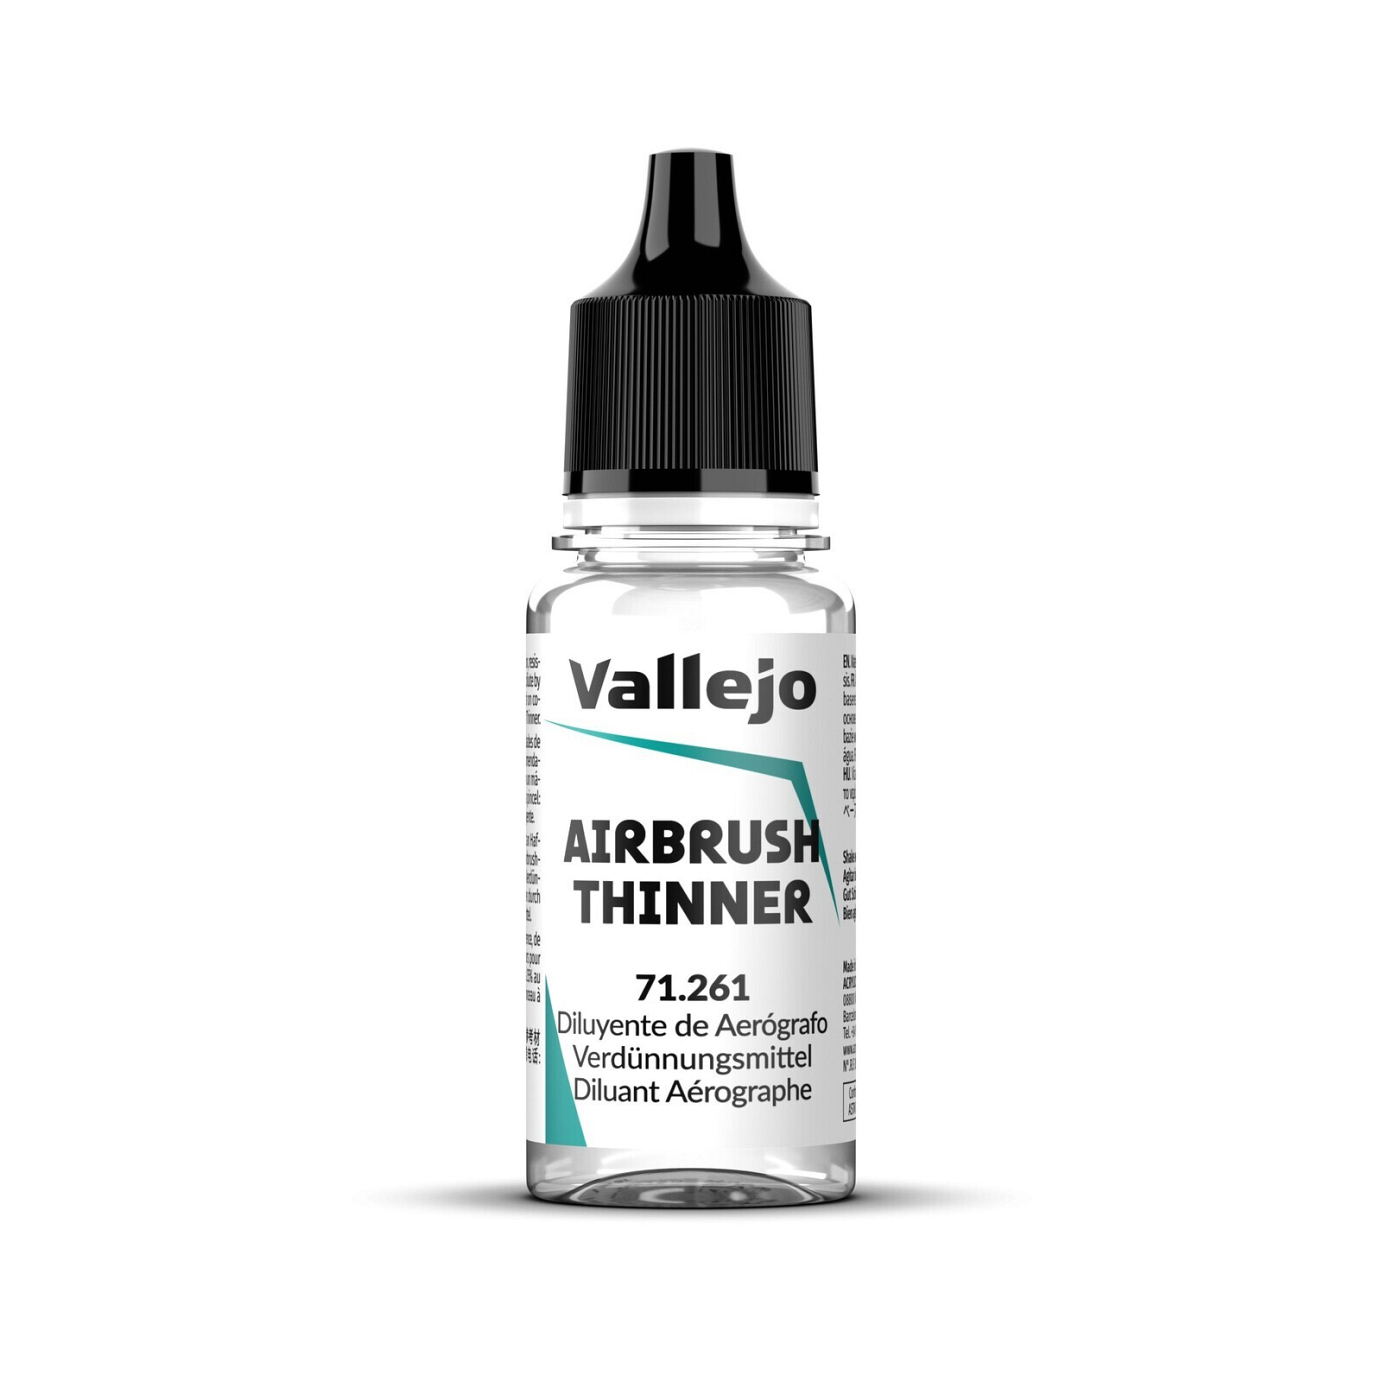 Vallejo Airbrush Thinner 18ml Acrylic Paint - New Formulation